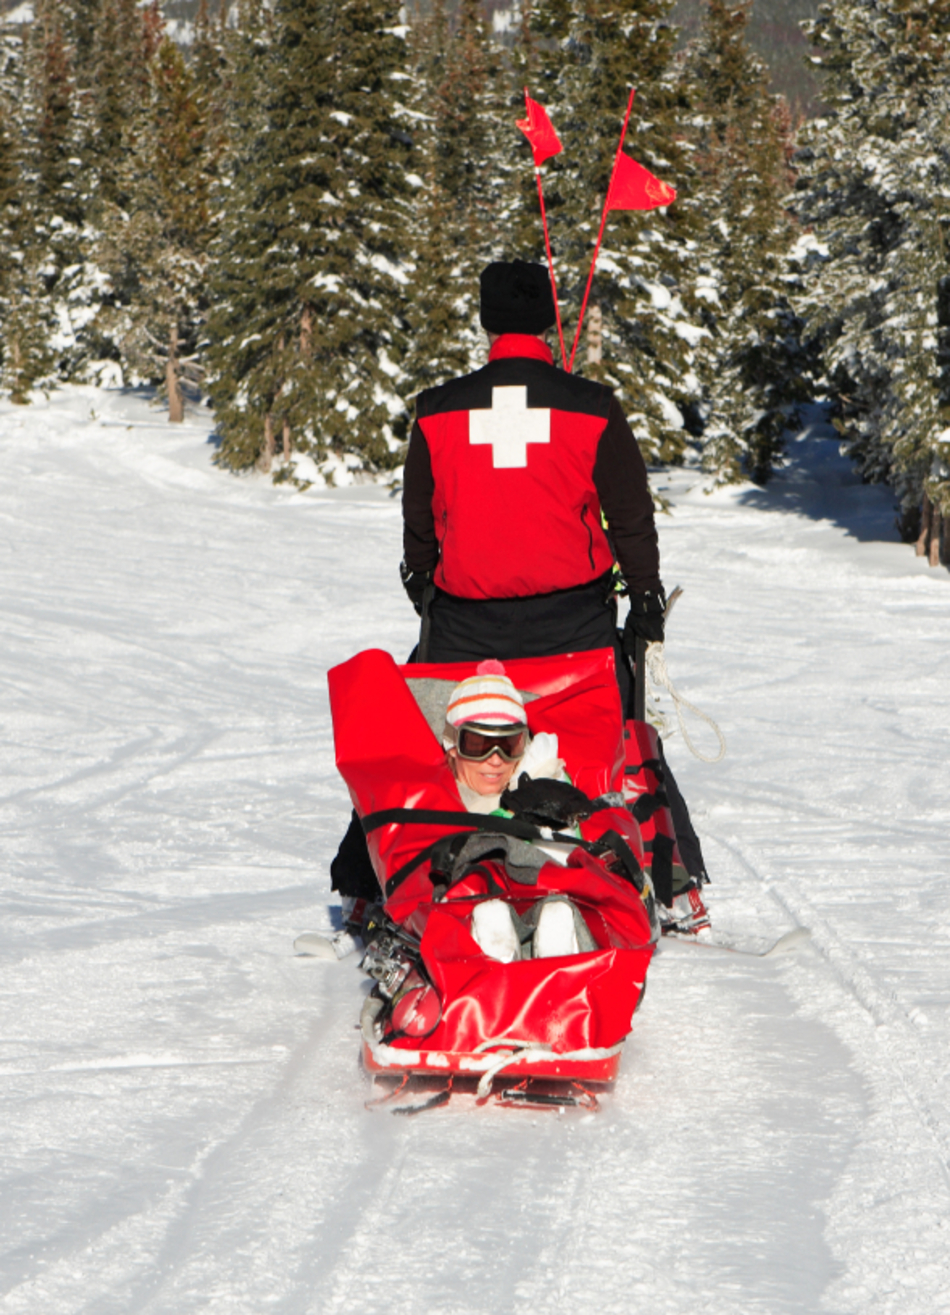 How to Avoid Ski & Snowboarding Injuries